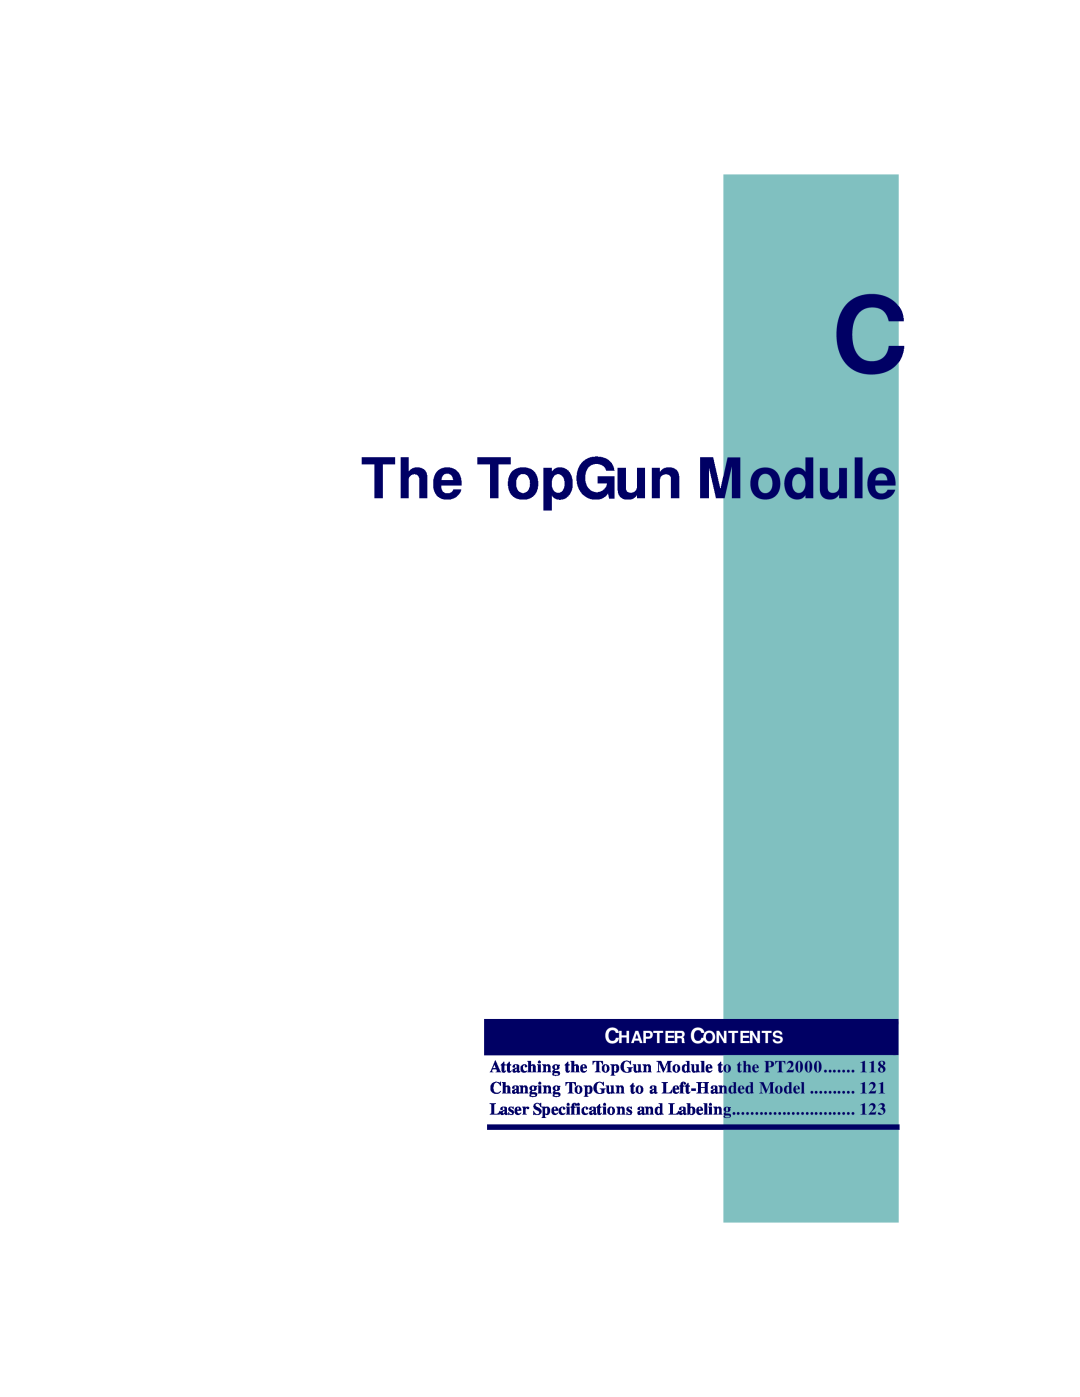 PSC PT2000 manual The TopGun Module, Chapter Contents 